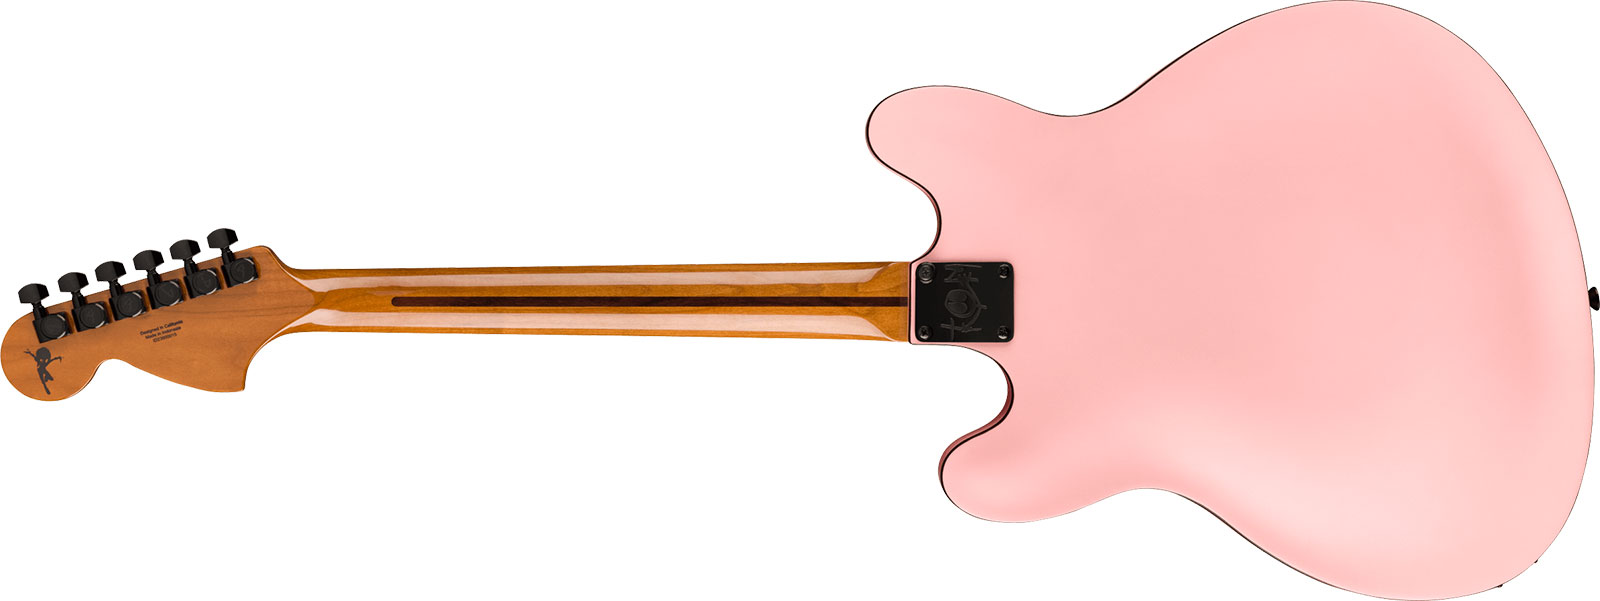 Fender Tom Delonge Starcaster Signature 1h Seymour Duncan Ht Rw - Satin Shell Pink - Semi-Hollow E-Gitarre - Variation 1